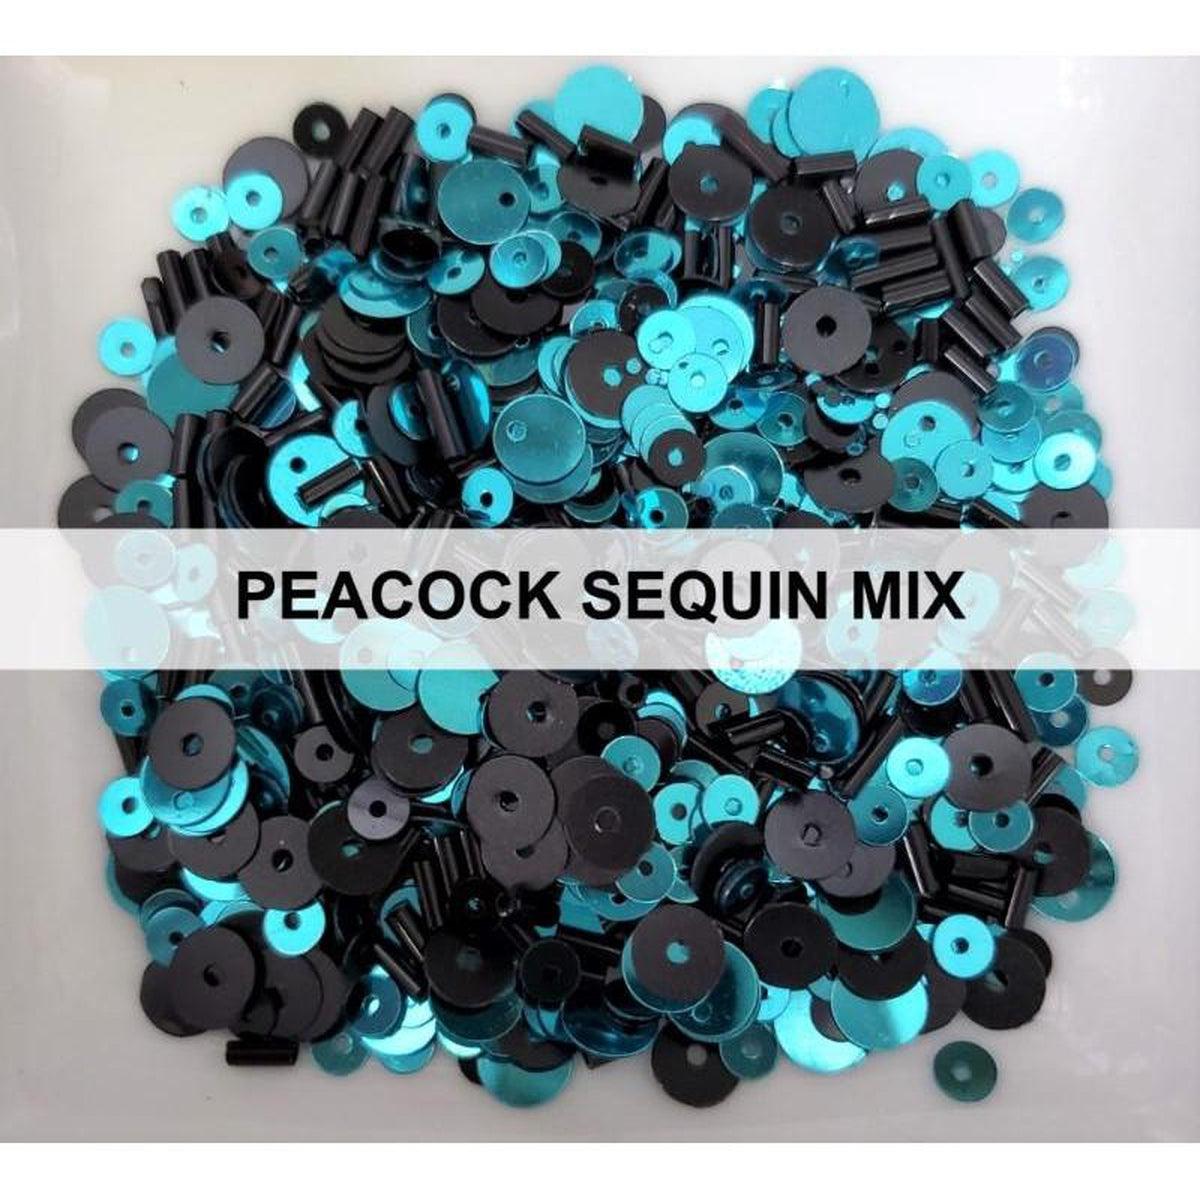 Peacock Sequin Mix